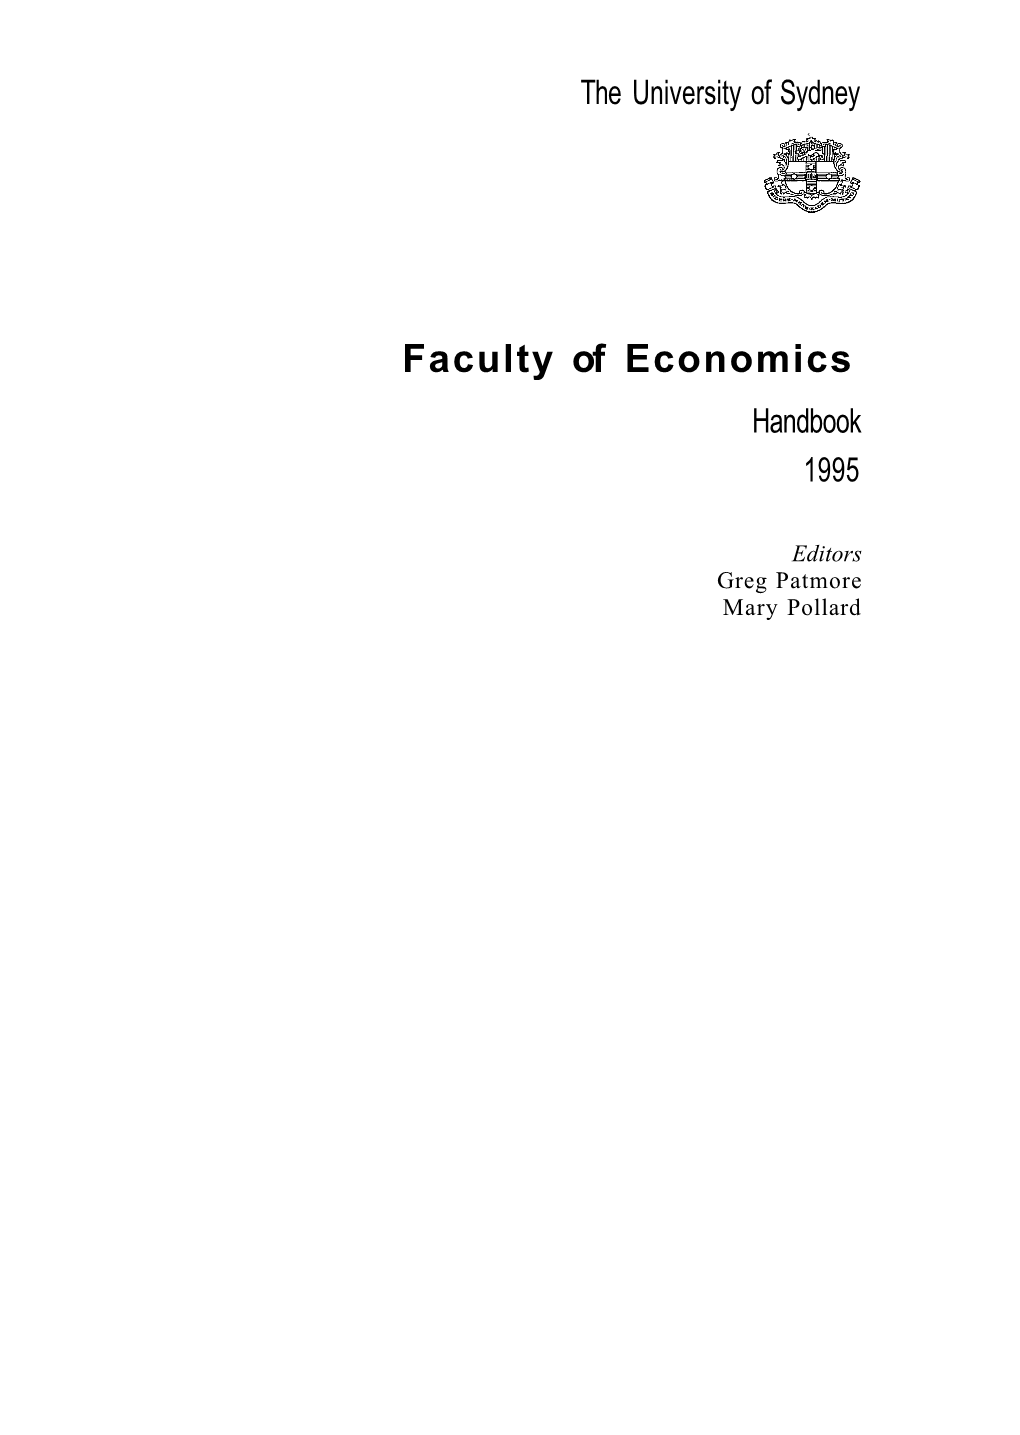 Faculty of Economics Handbook 1995